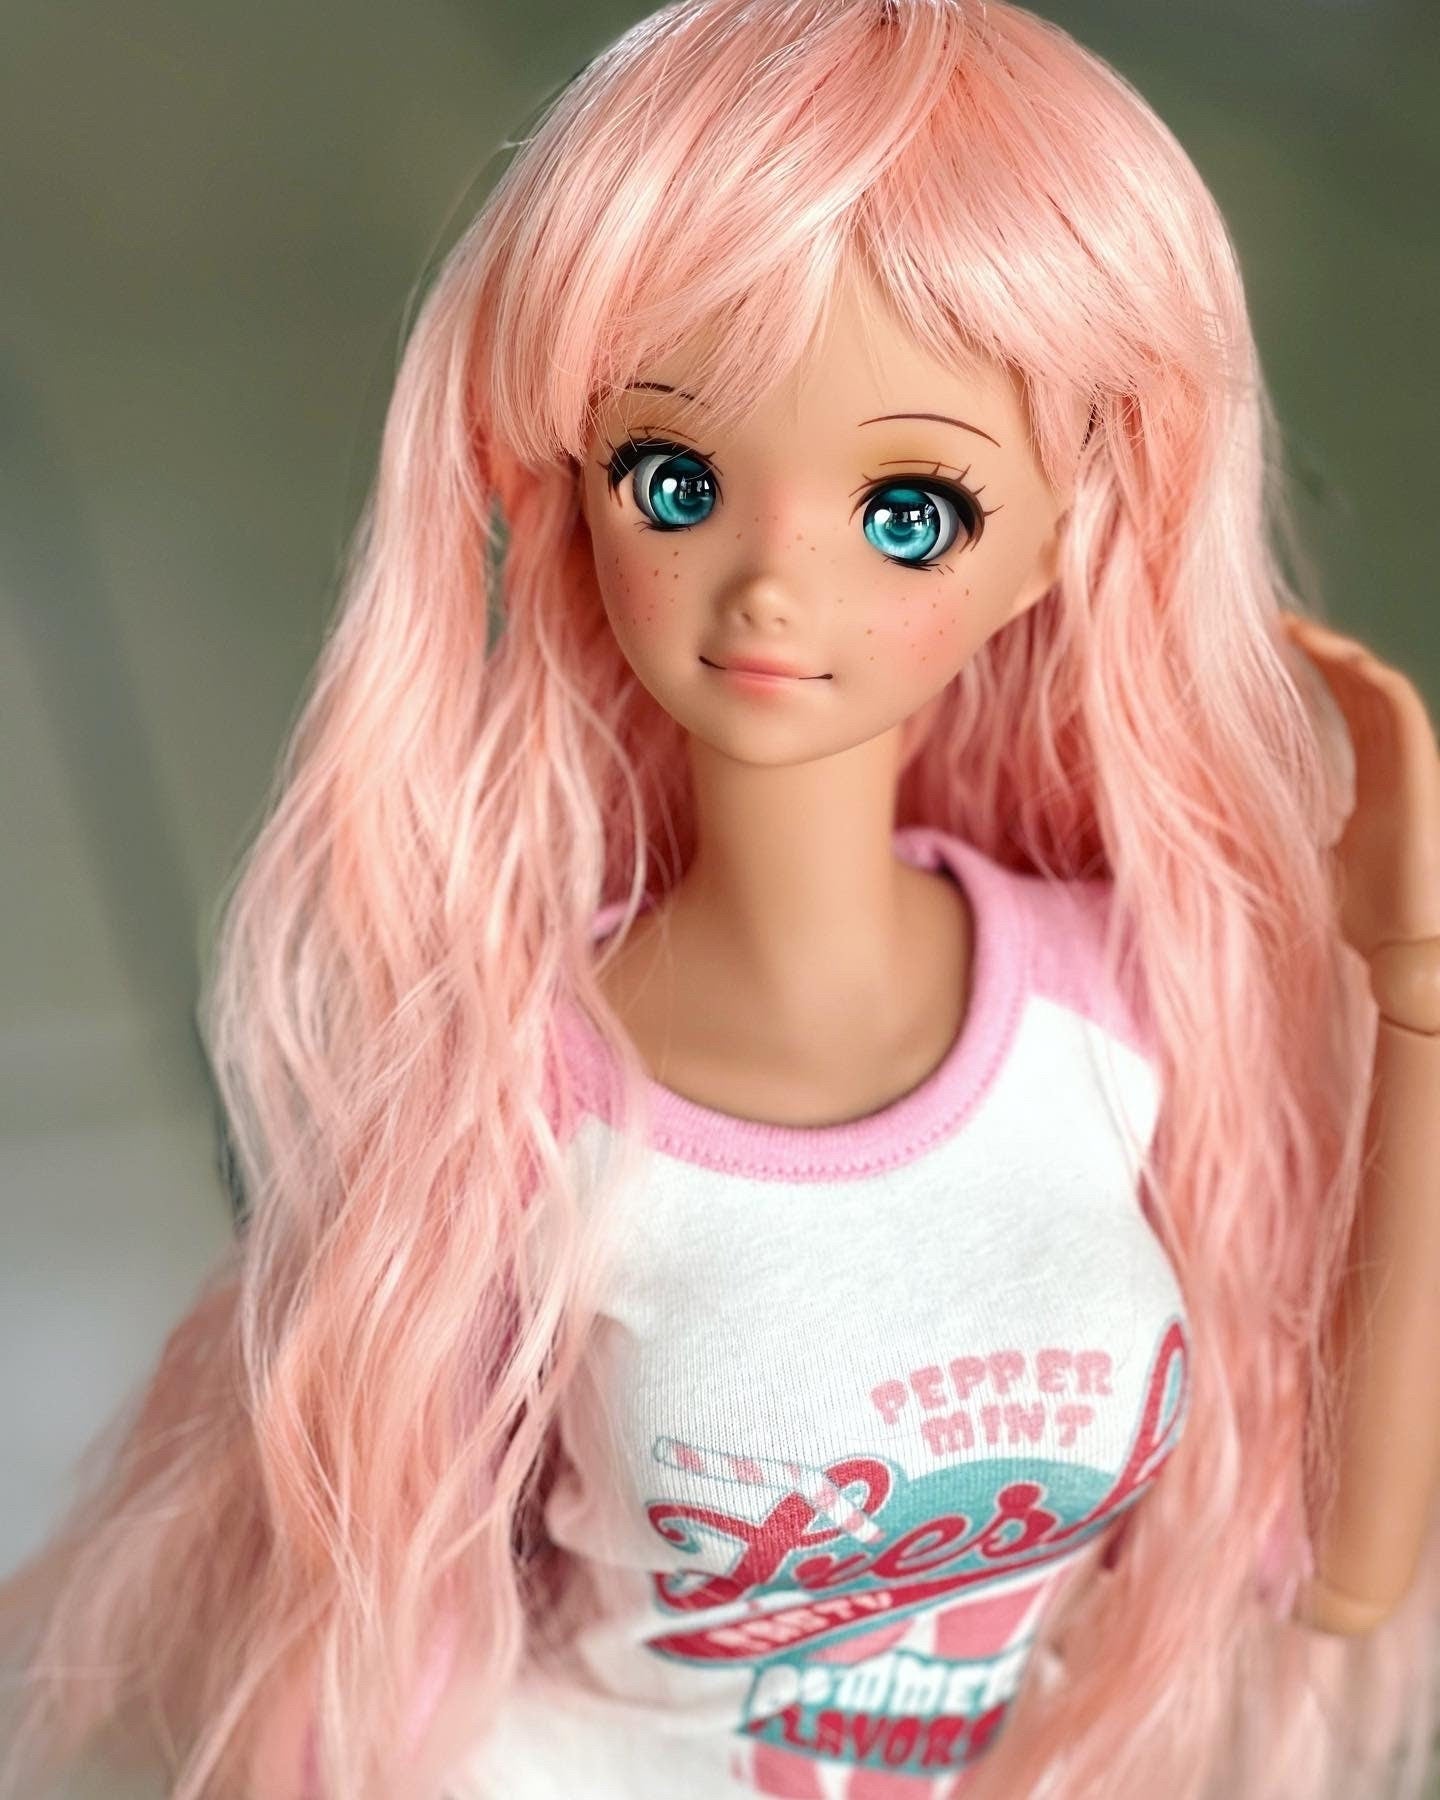 Custom doll Wig for Smart Dolls- Heat Safe - Tangle Resistant- 8.5" head size of Bjd, SD, Dollfie Dream dolls Peach Limited